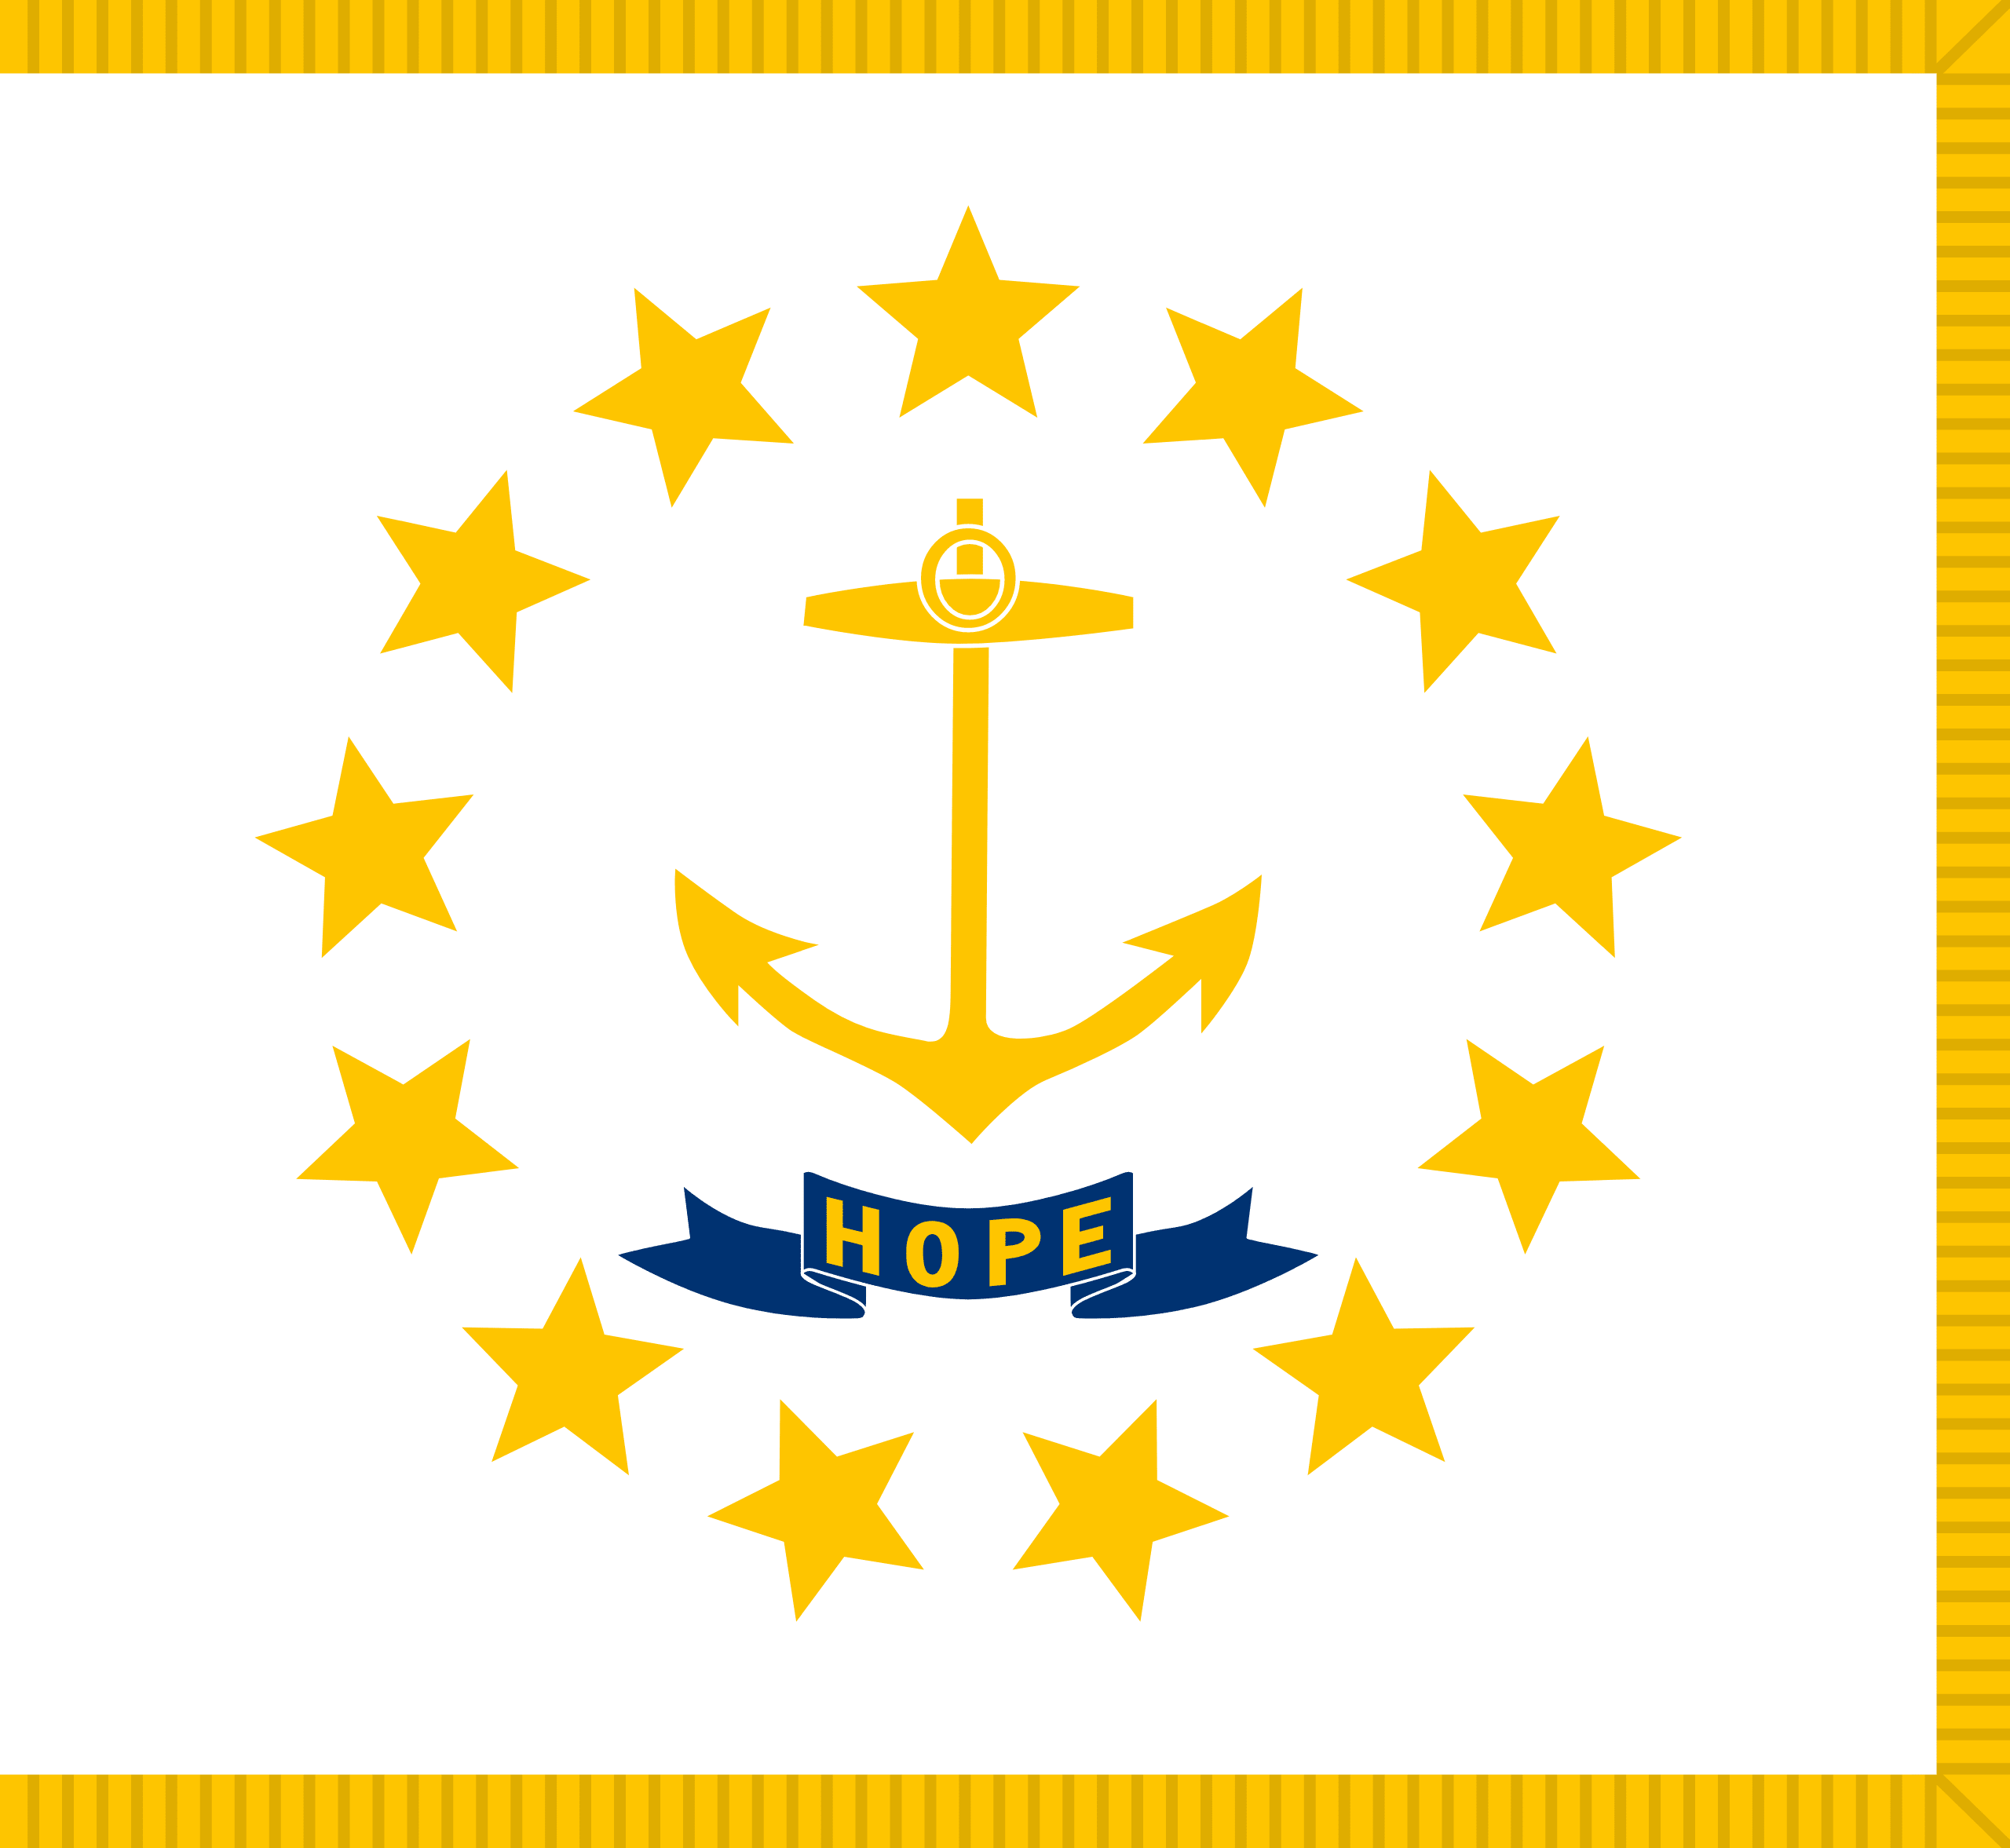 Rhode Island License Plate Lookup